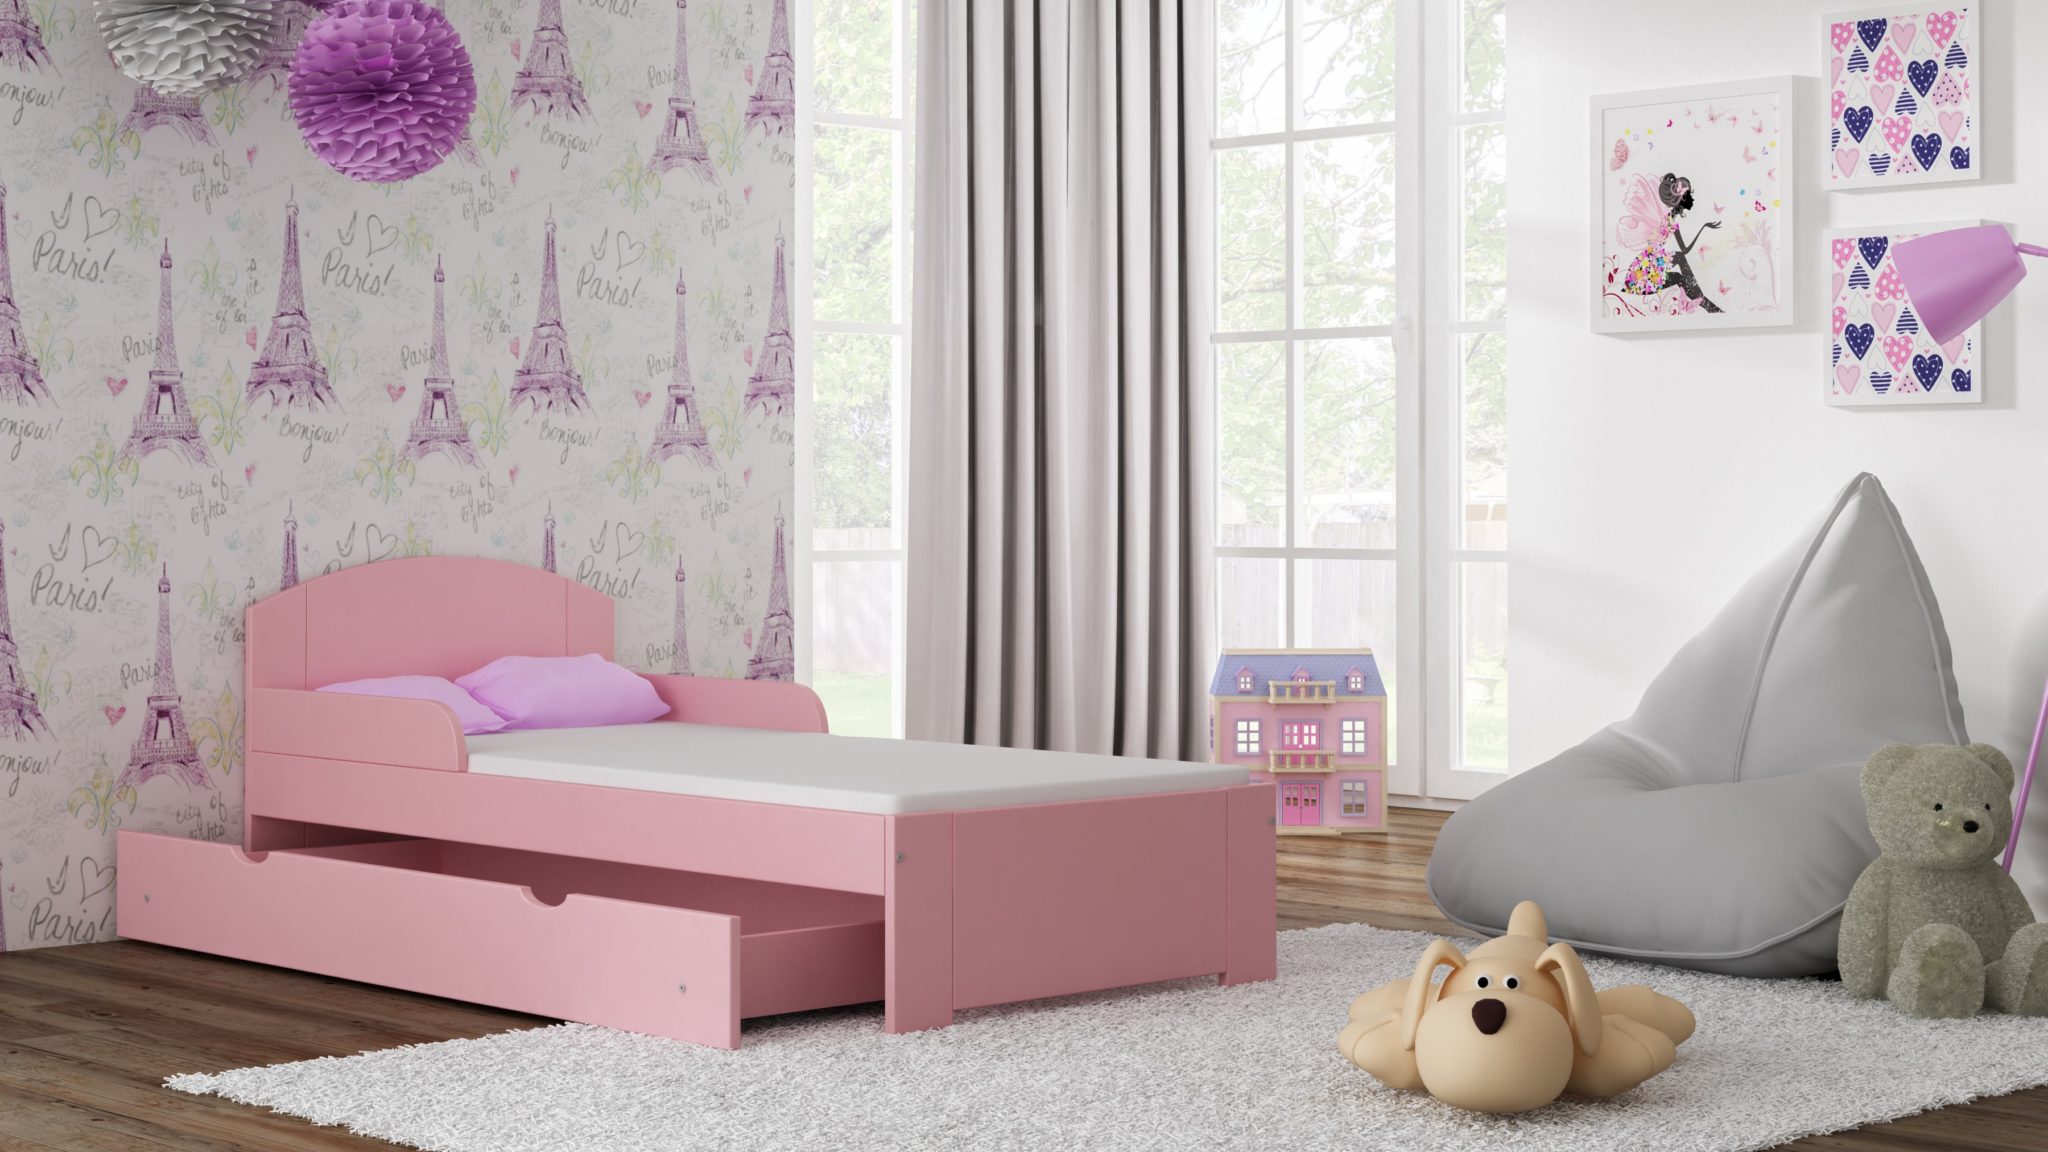 Dětská postel Bili S 160x80 10 barevných variant !!!